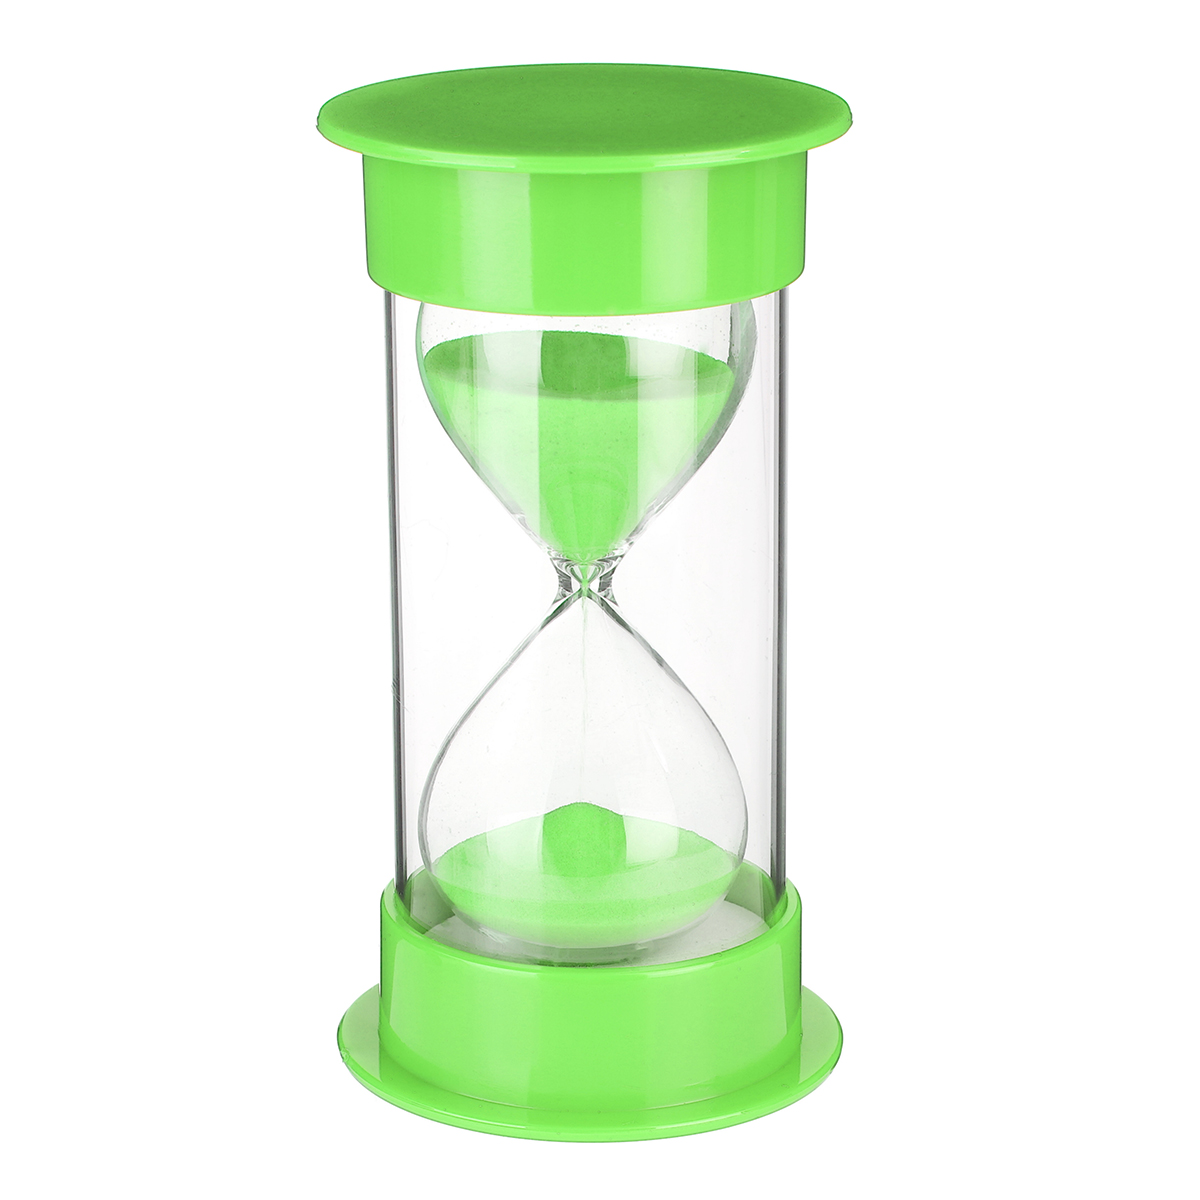 30min-Minutes-Sand-Glass-Sandglass-Hourglass-Timer-Clock-Home-Decor-SEN-ASD-ADHD-1233385